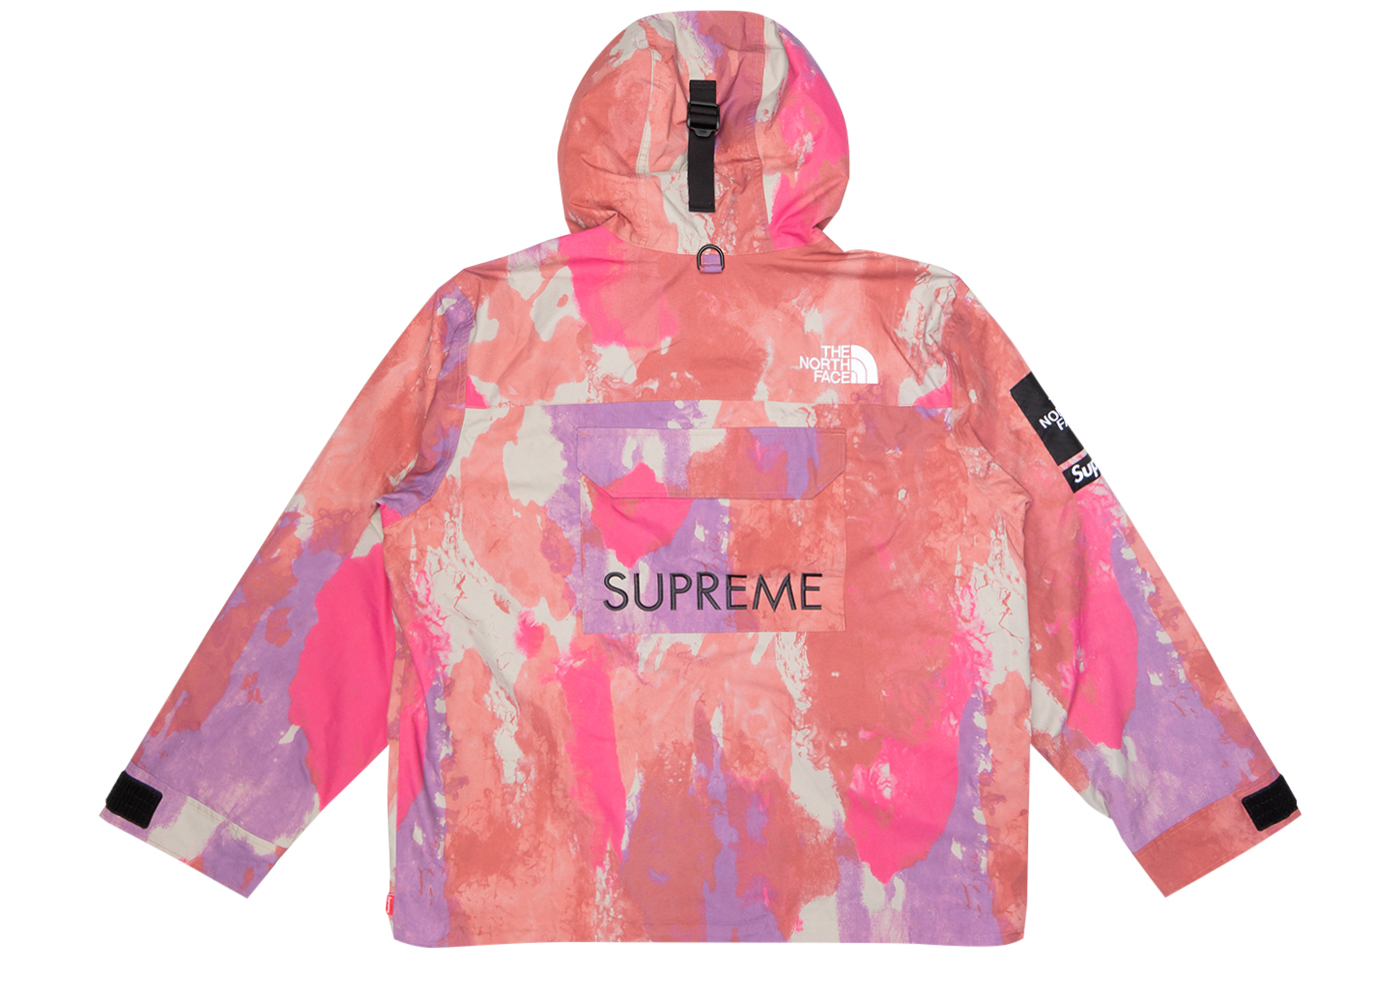 supreme x north face jacket price